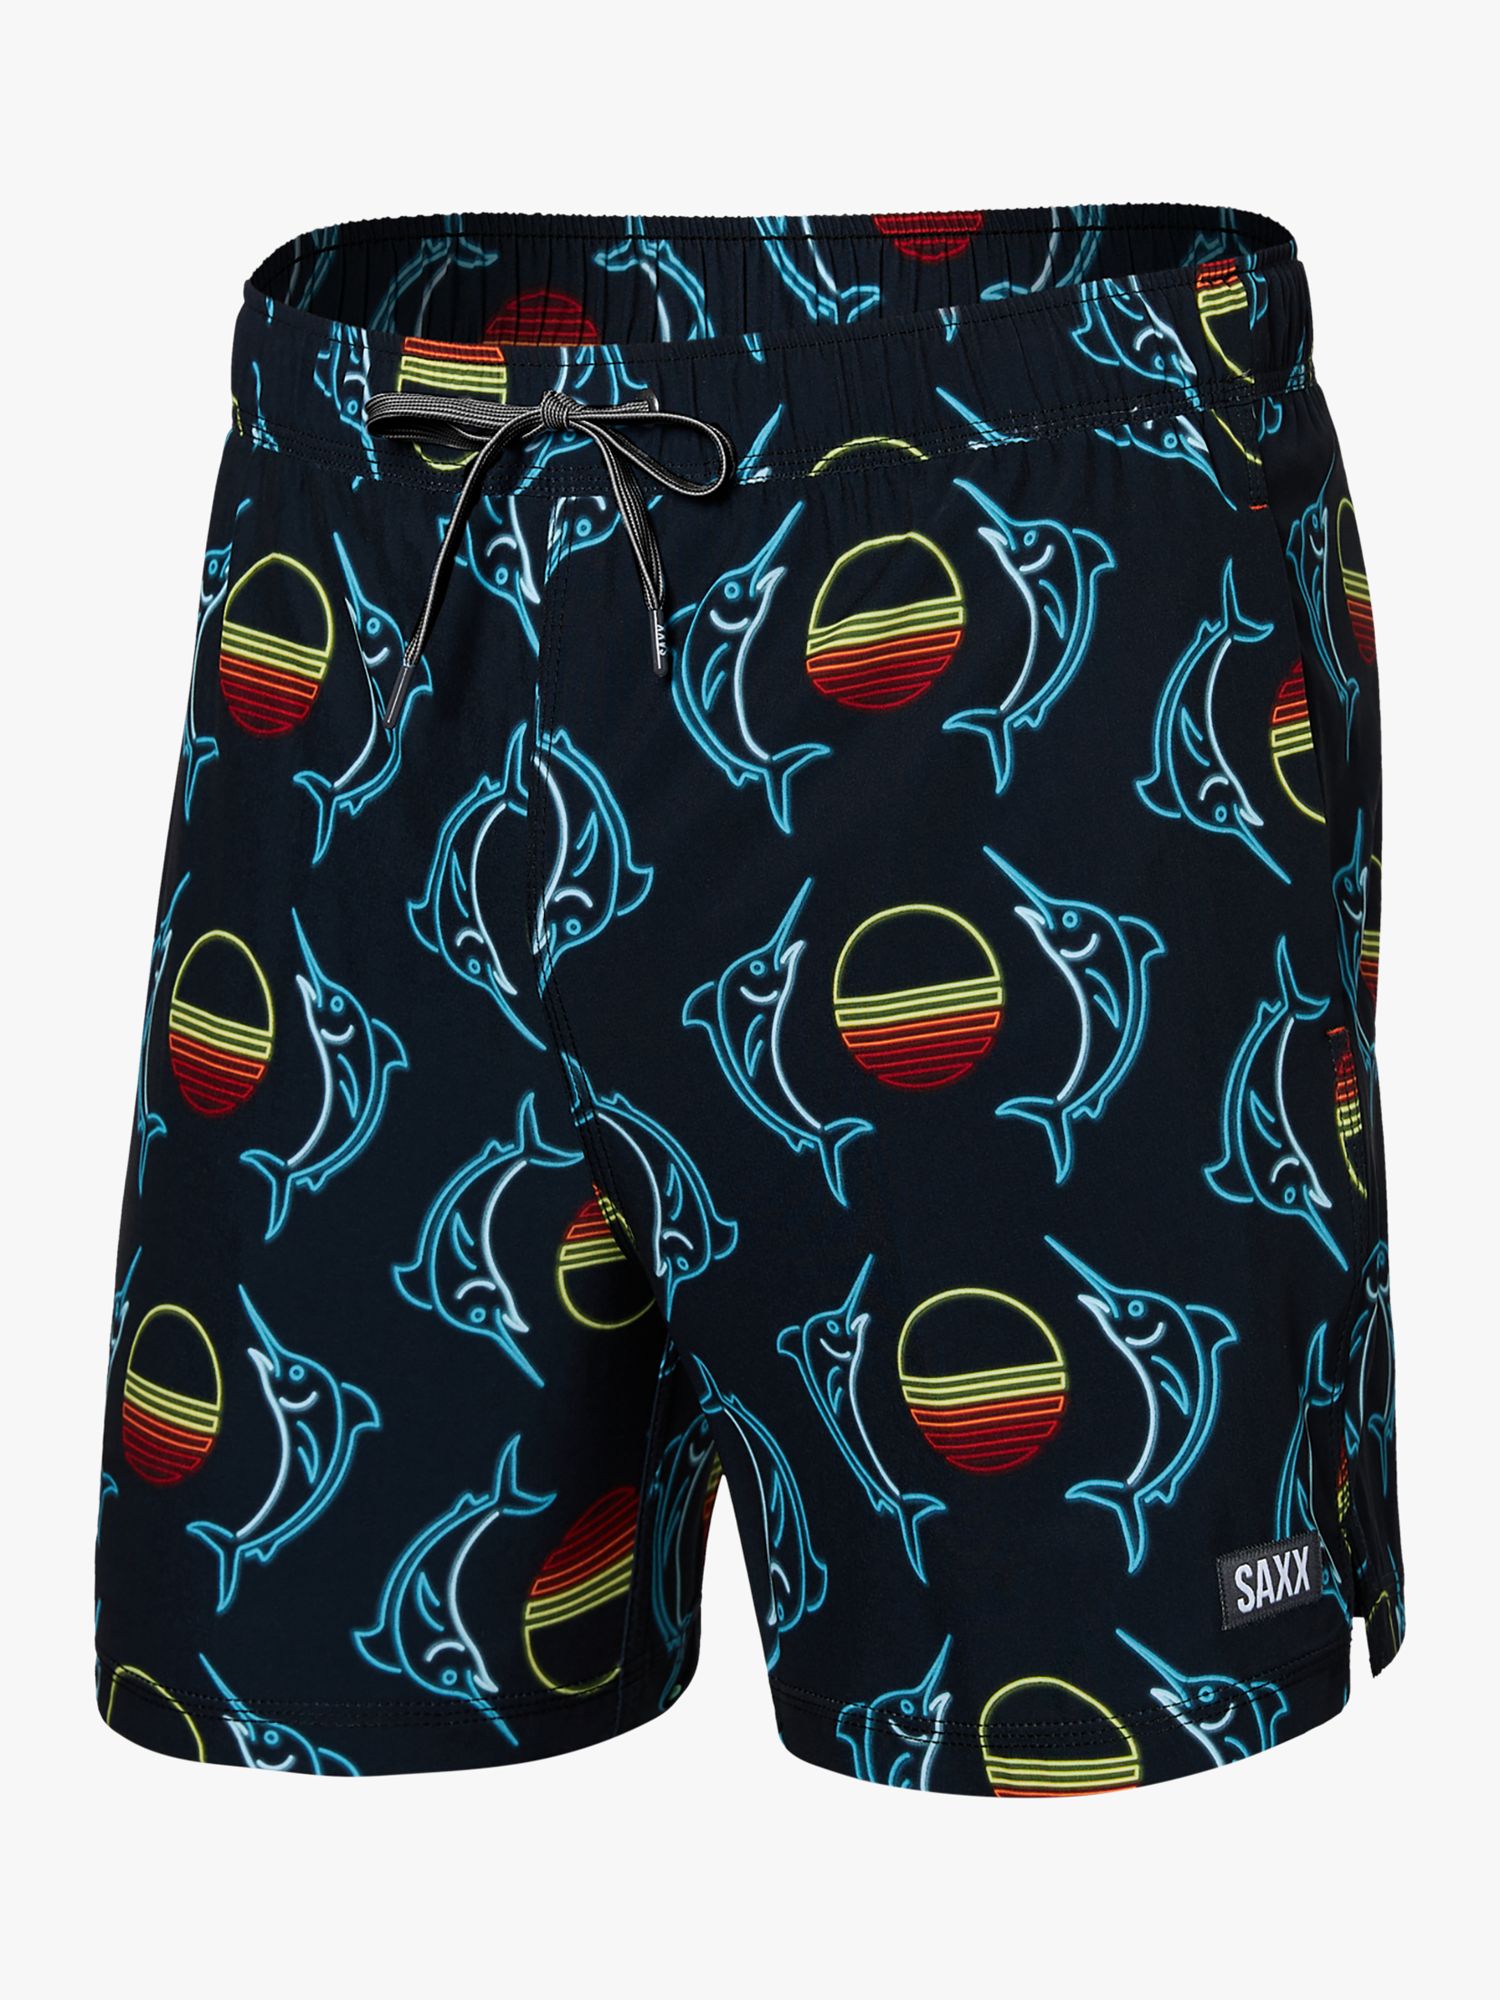 SAXX Oh Buoy 2-in-1 Swim Shorts, Multi, XL